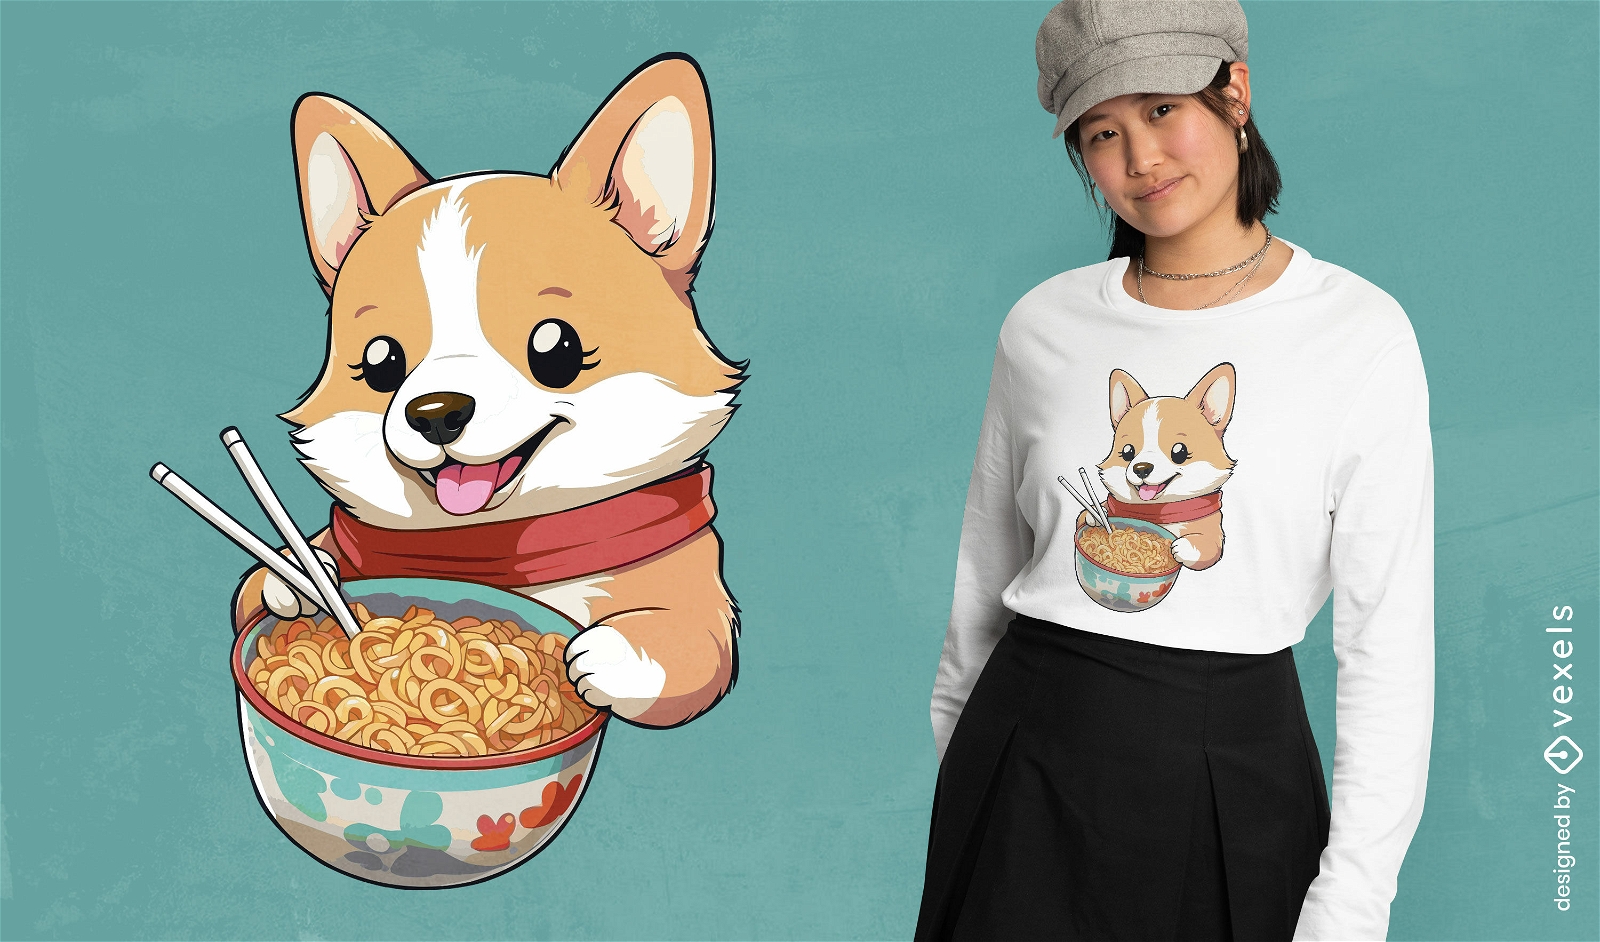 Corgi eating ramen noodles t-shirt design